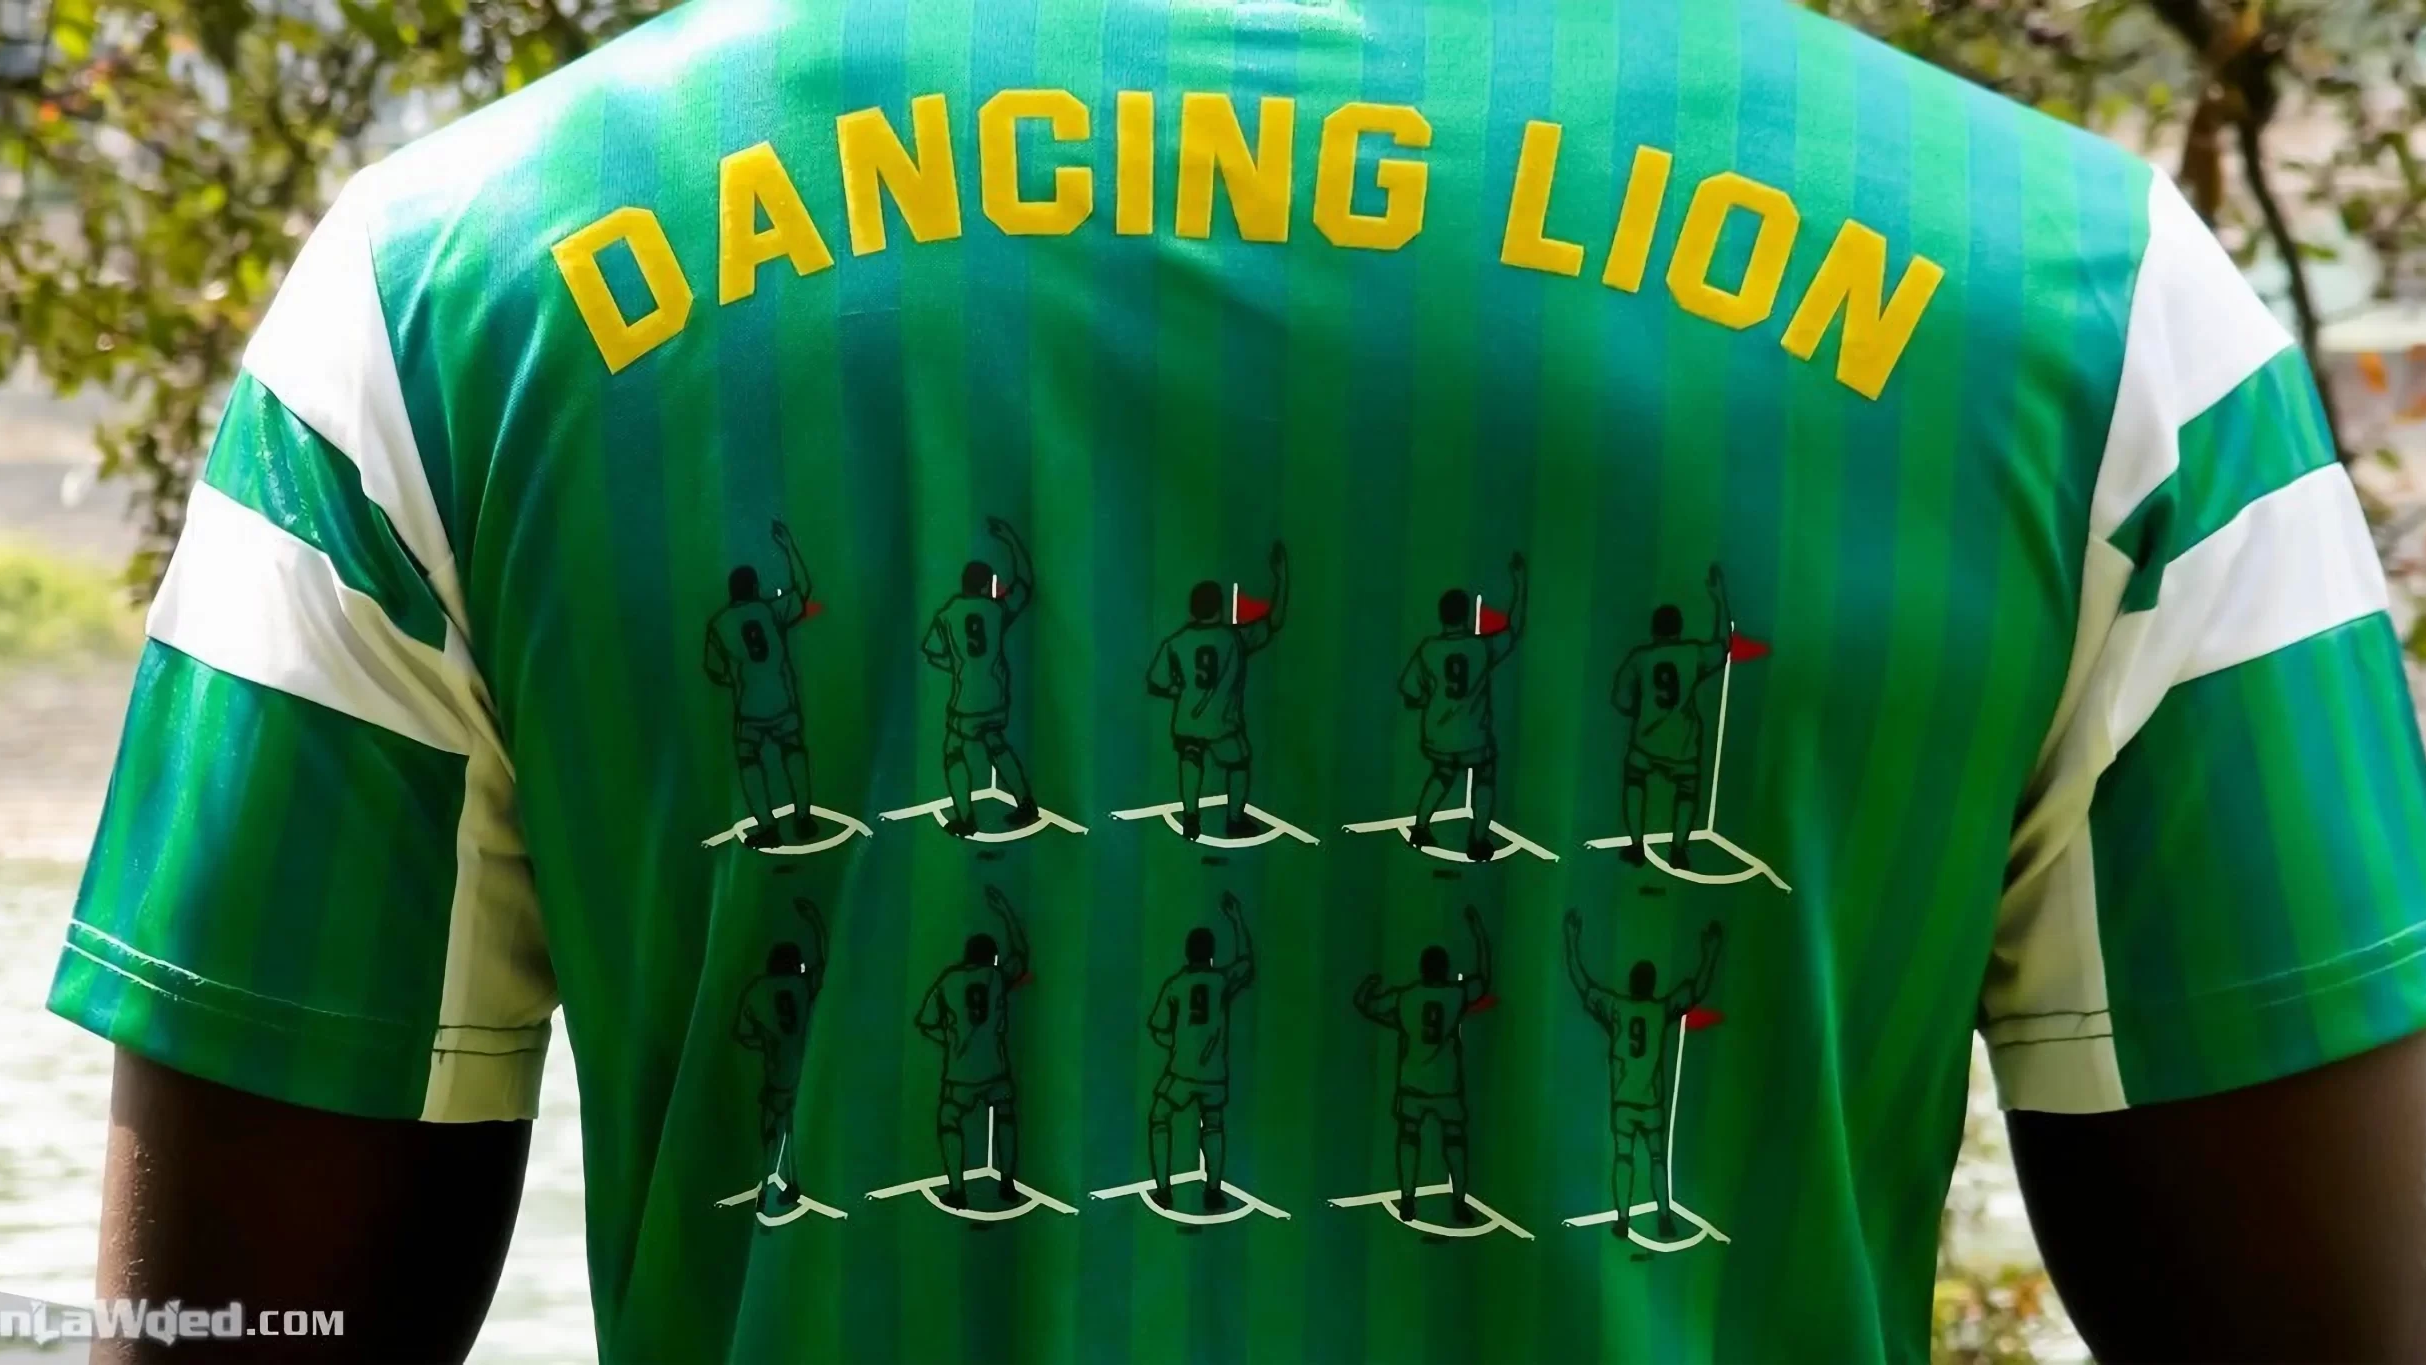 Men's 2006 Cameroon '90 Dancing Lion Jersey by Adidas: Intelligent (EnLawded.com file #lmchk90485ip2y122993kg9st)